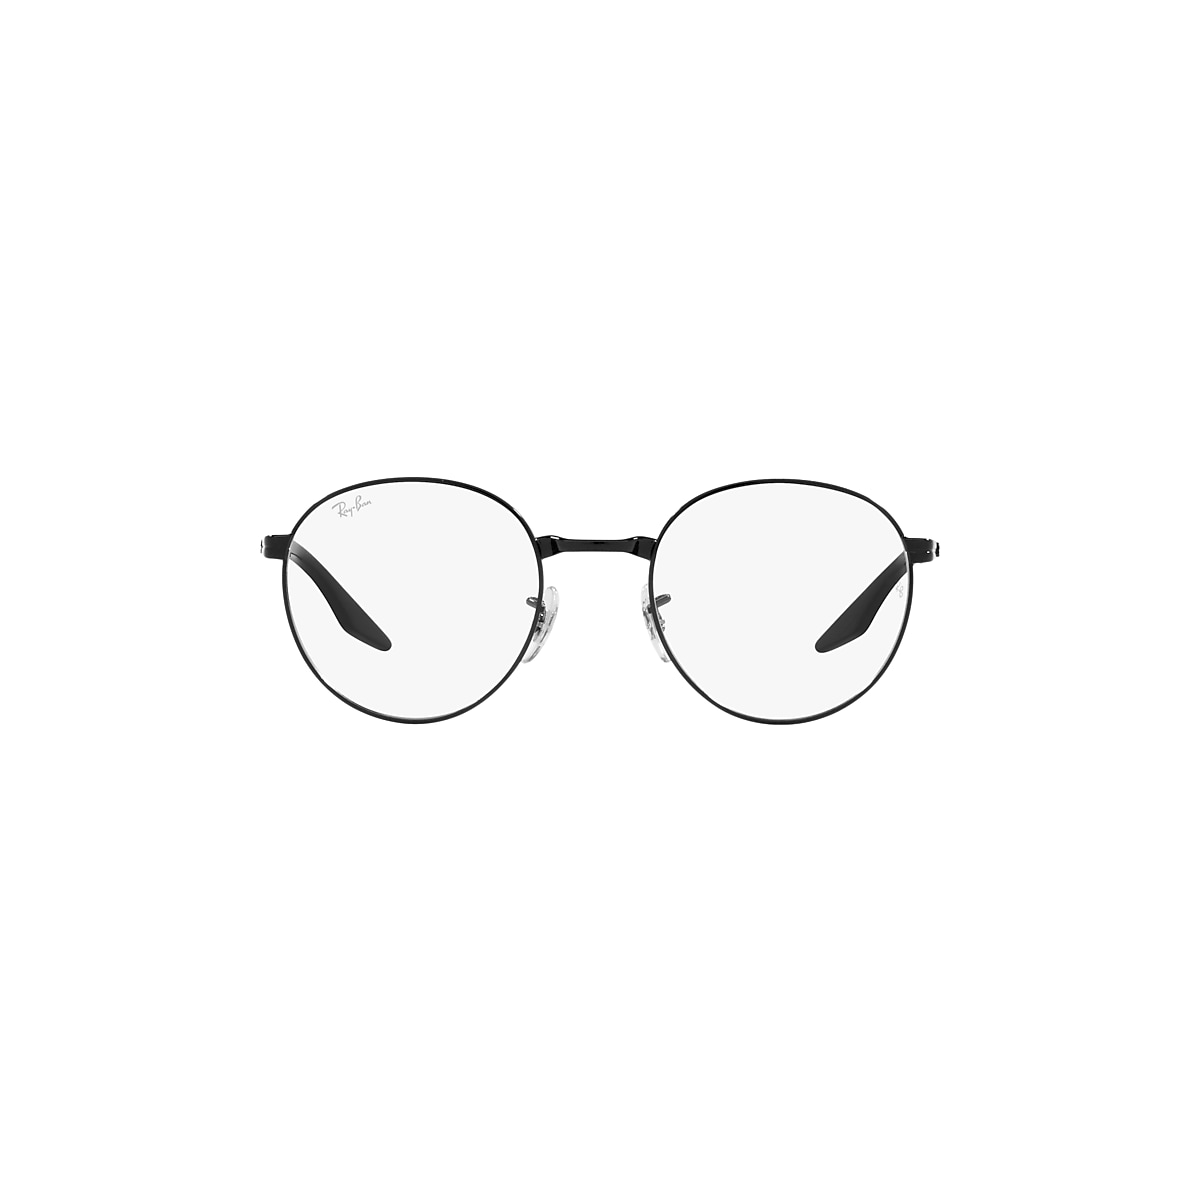 RB3691 OPTICS Eyeglasses with Black Frame - RB3691V - Ray-Ban